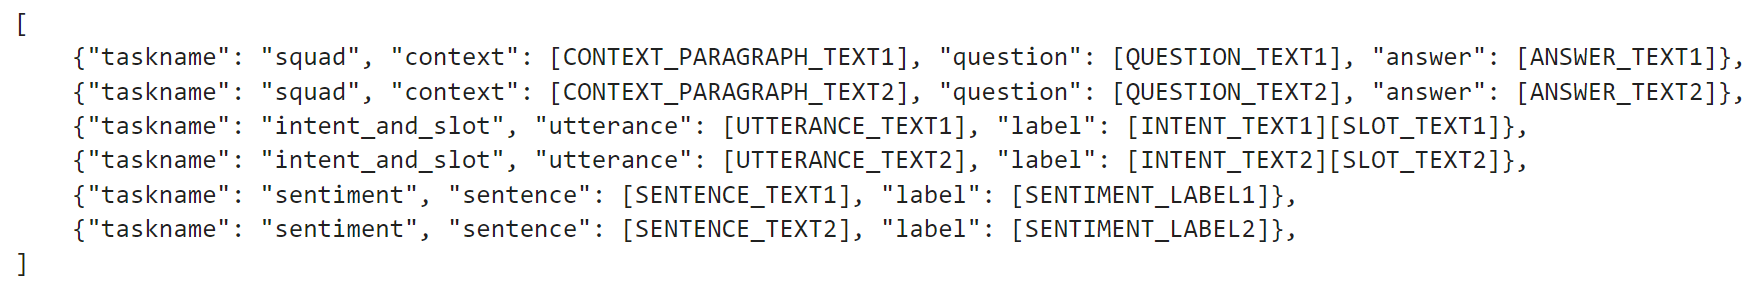 Screenshot of dataset format for NVIDIA NeMo prompt learning.